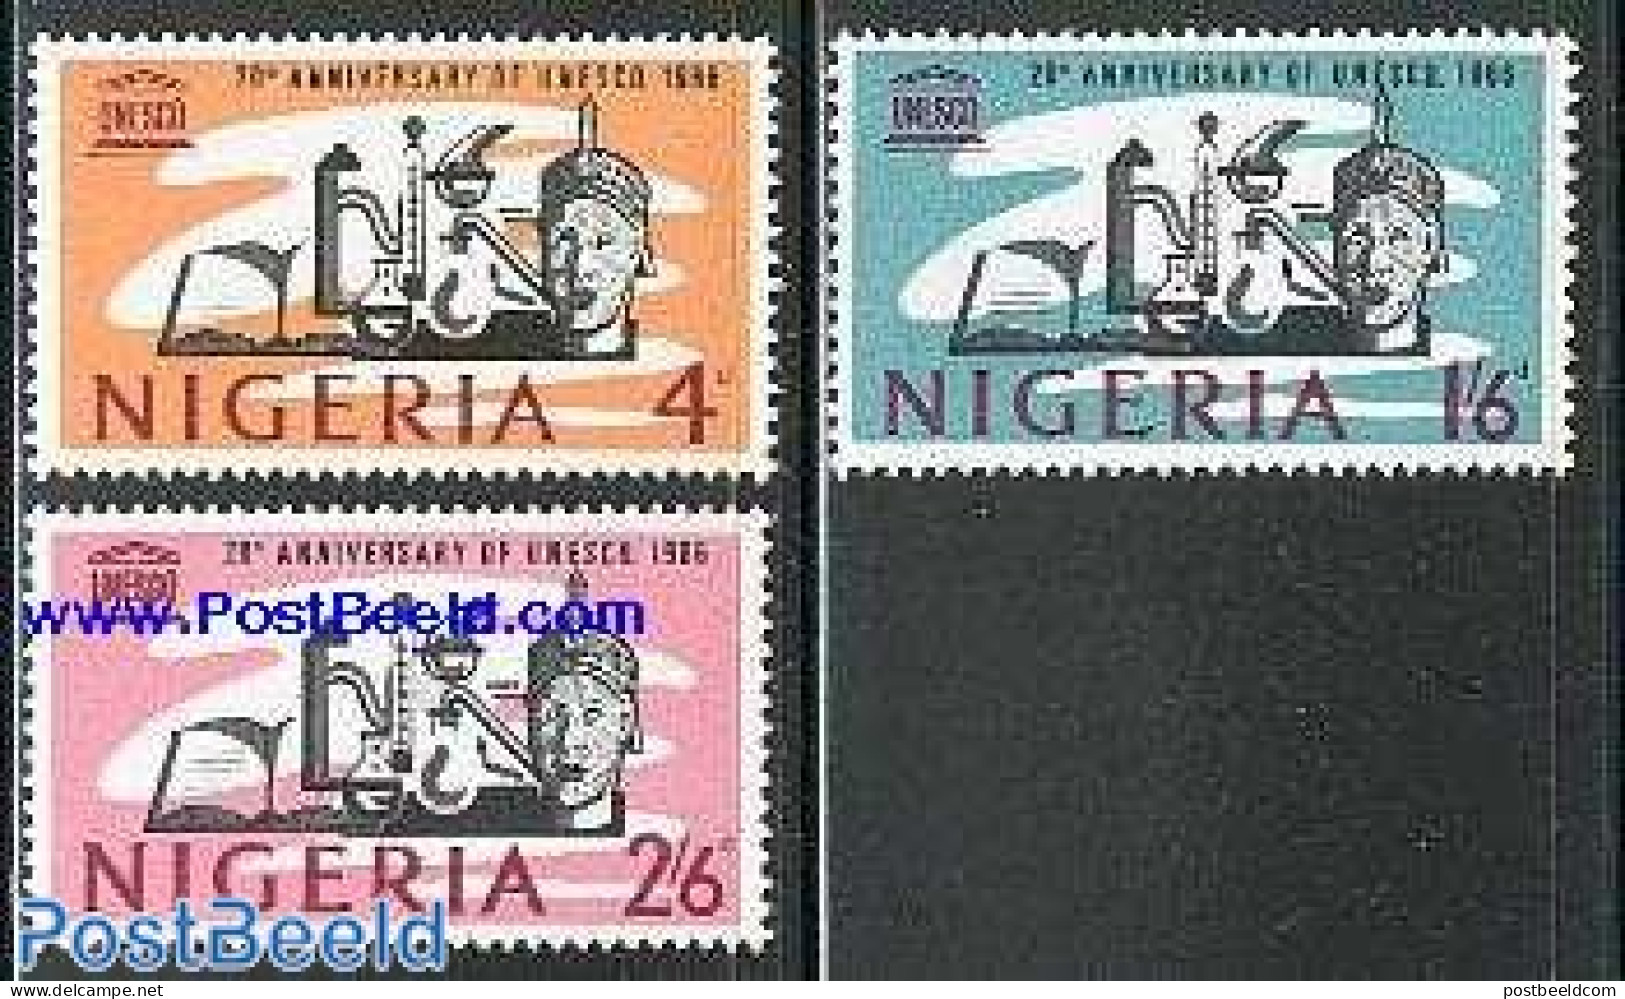 Nigeria 1966 UNESCO 3v, Mint NH, History - Science - Unesco - Chemistry & Chemists - Chemie